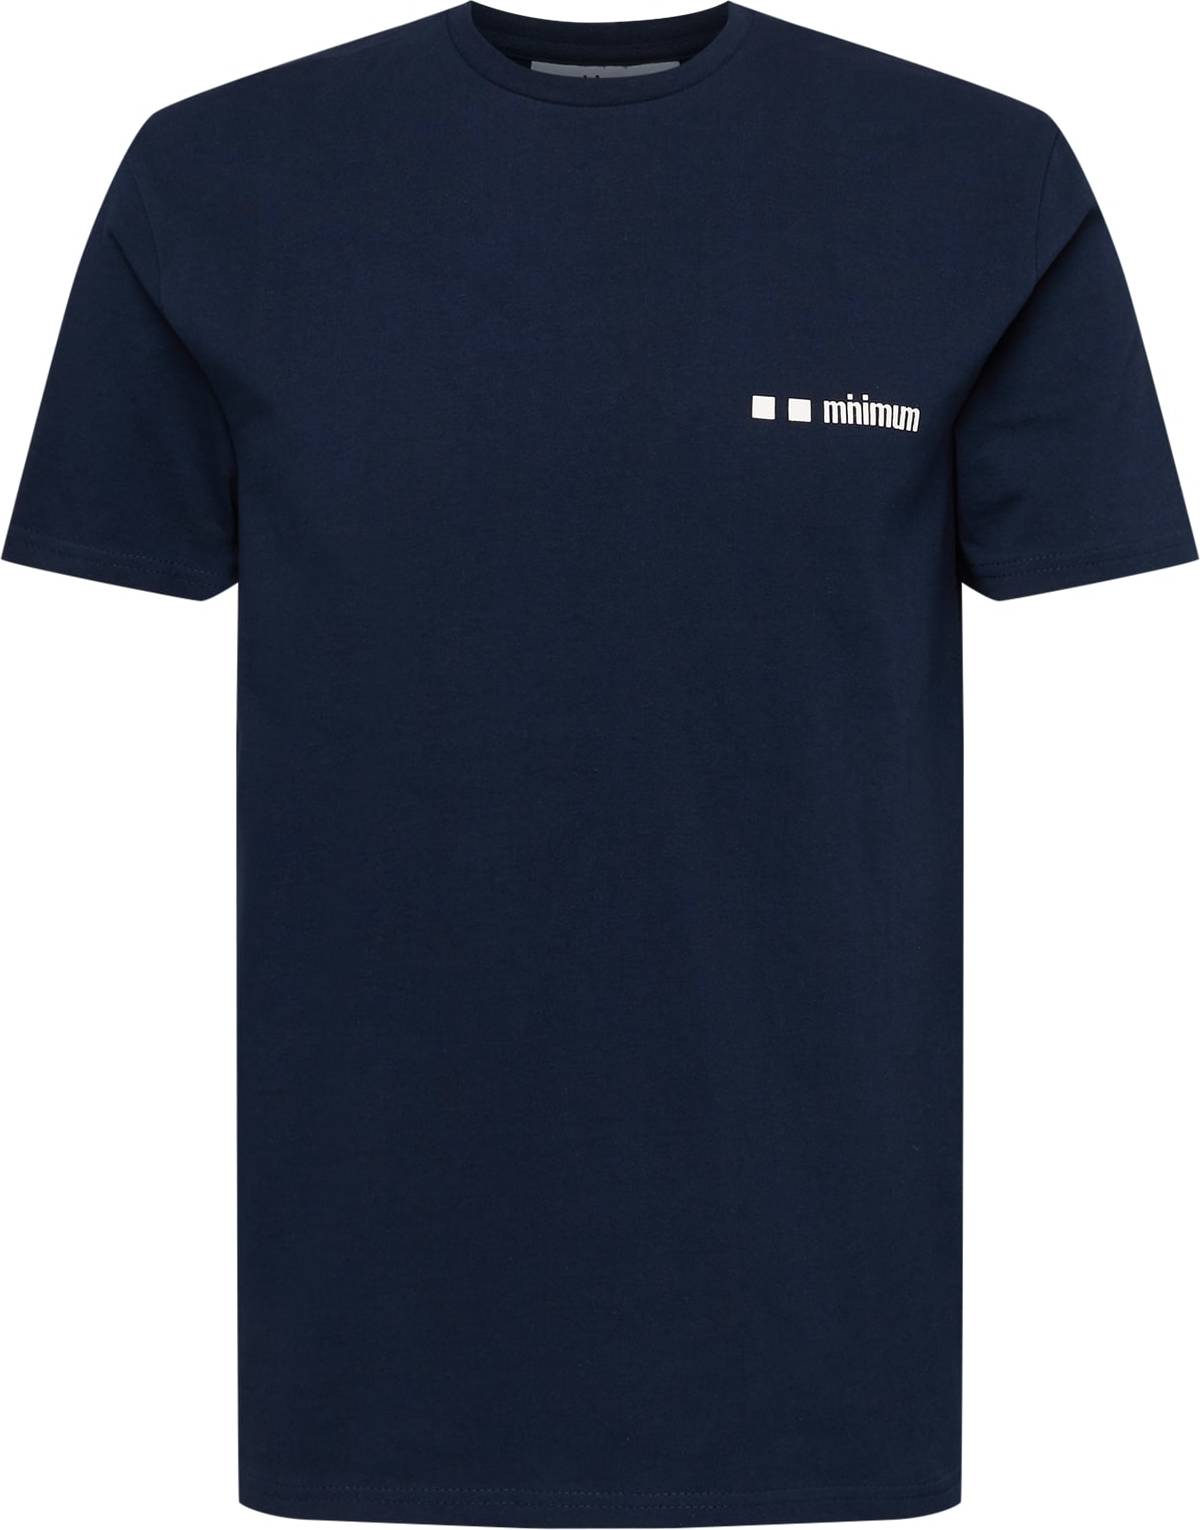 minimum Tričko námořnická modř / bílá